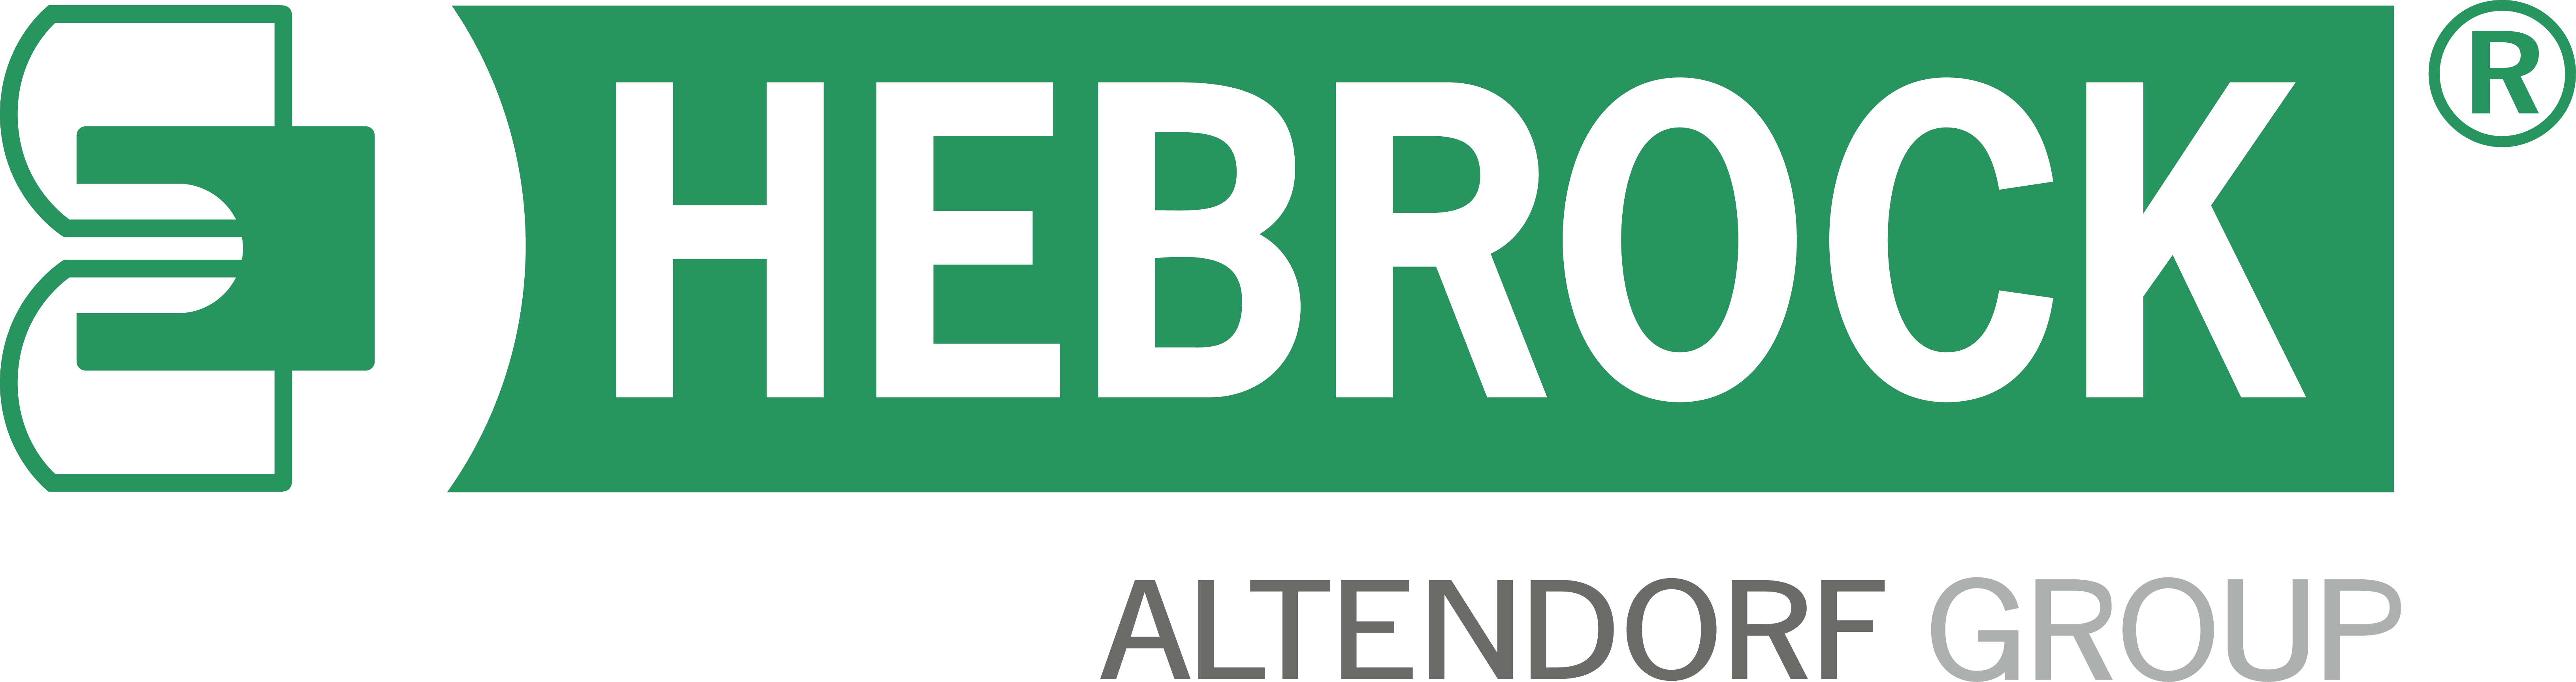 Hebrock logo